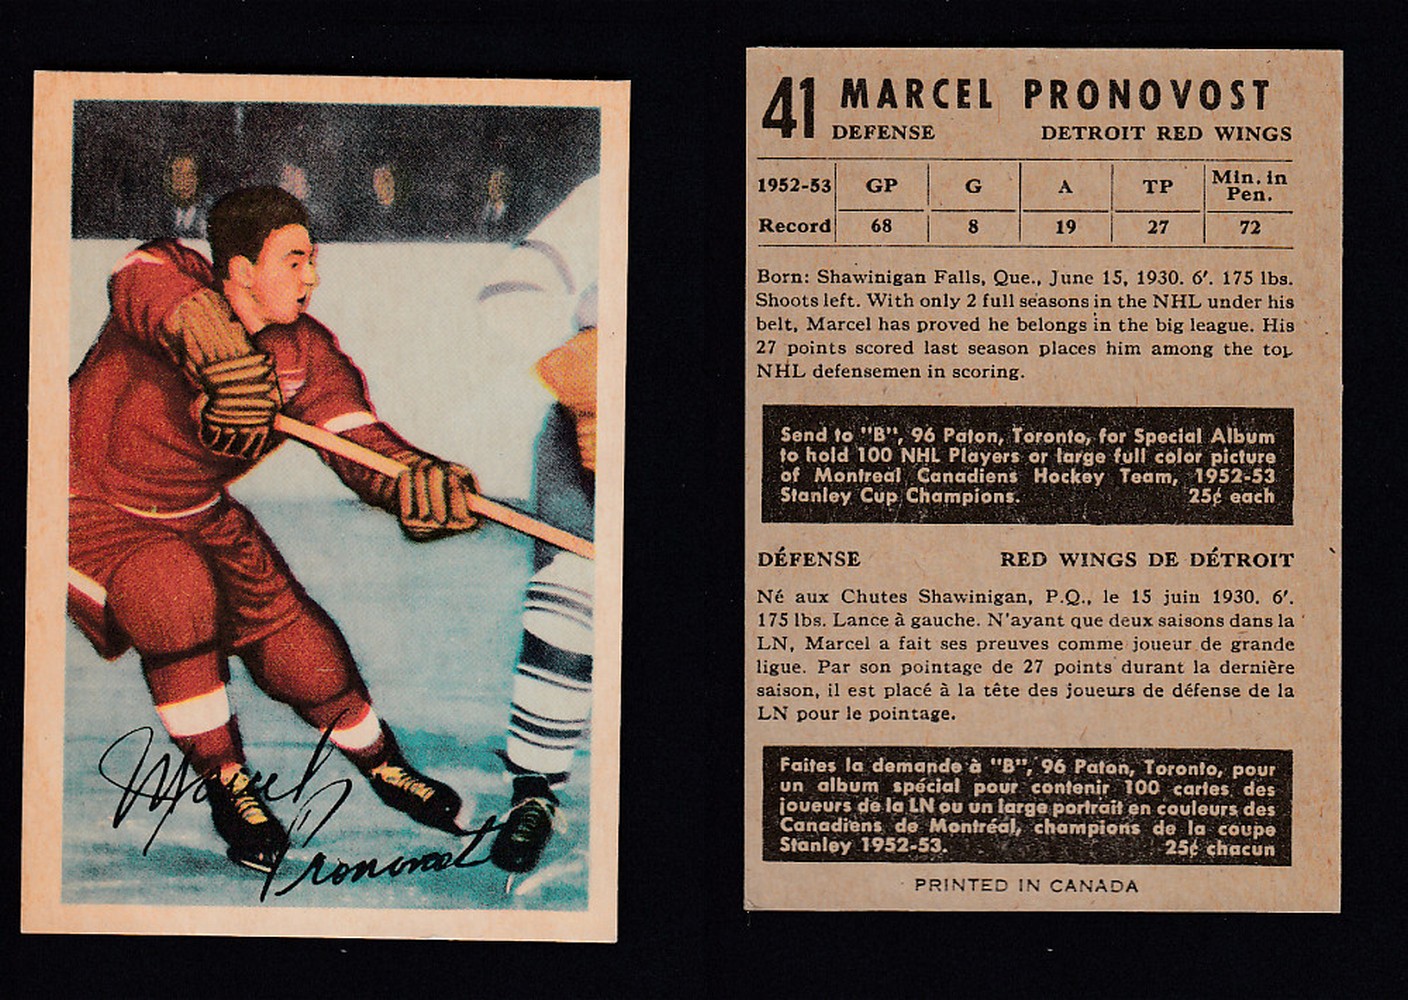 1953-54 PARKHURST HOCKEY CARD #41 M. PRONOVOST photo